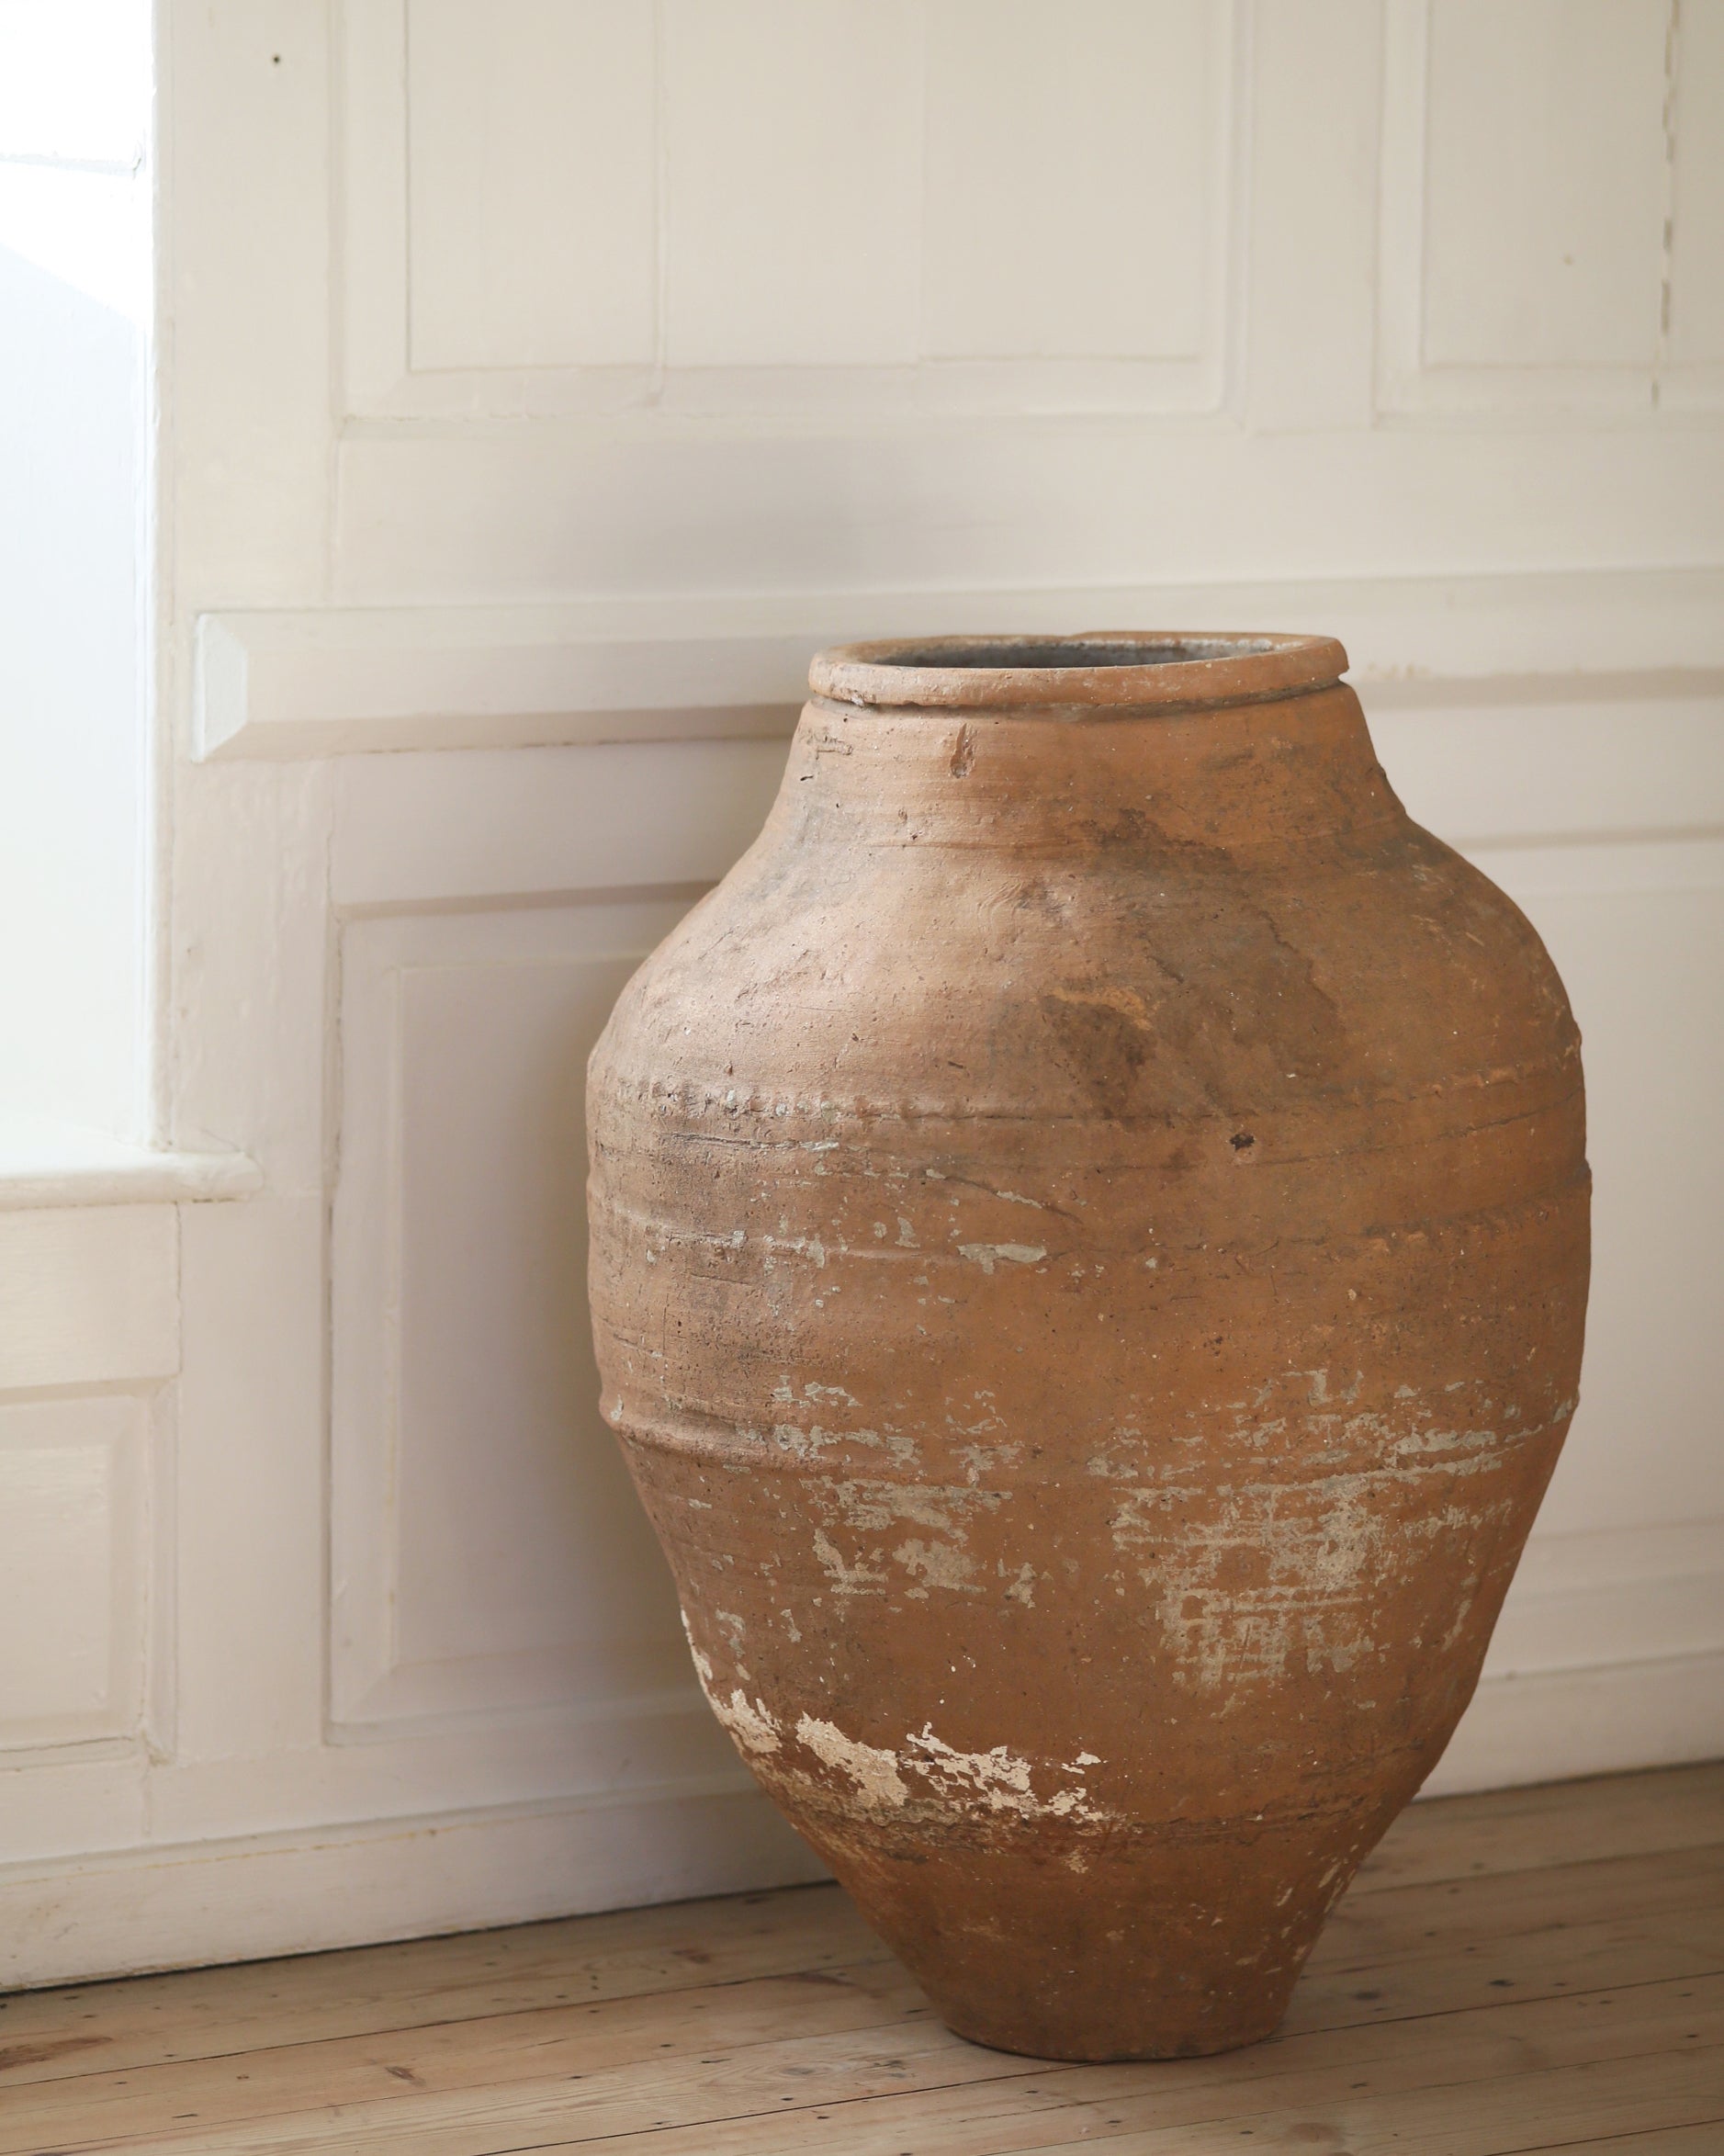 Aged antique terracotta pot originally for olive oil